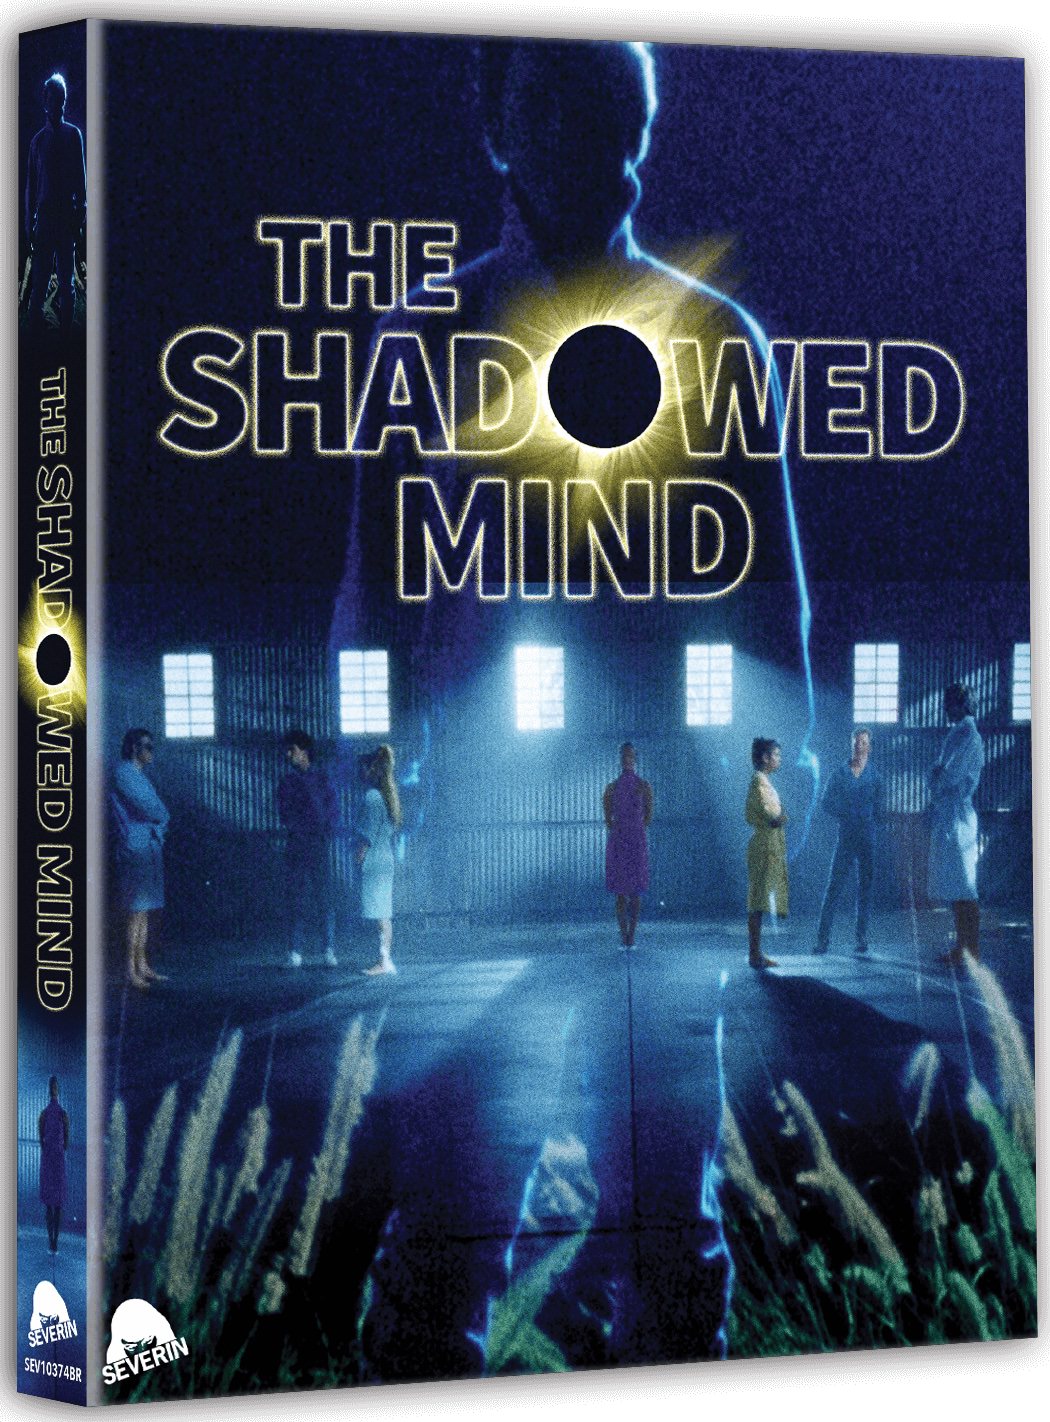 The Shadowed Mind [Blu-ray w/Slipcover]